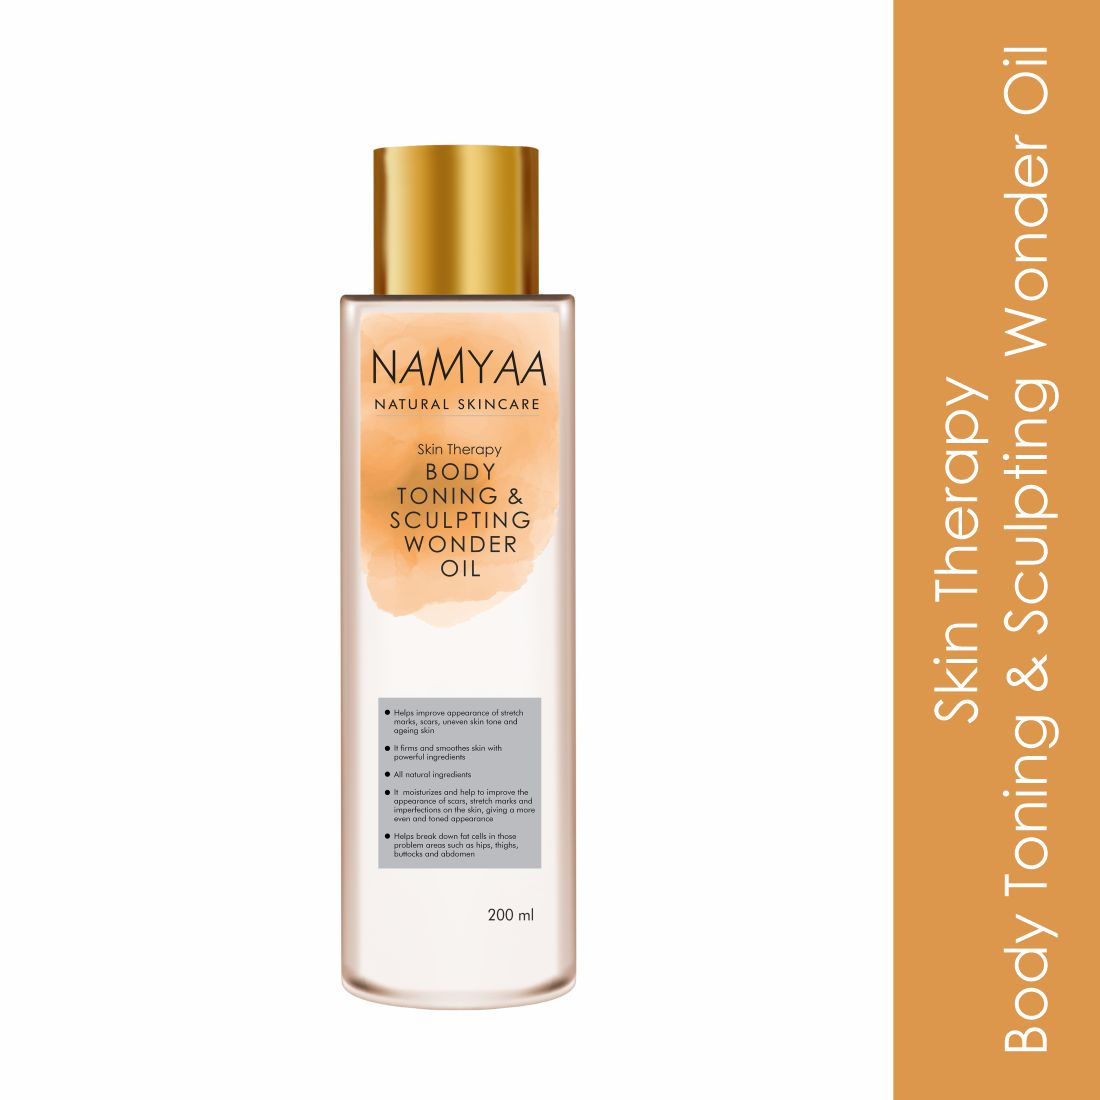 Namyaa Natural Skincare Skin Therapy Body Toning & Sculpting Wonder Oil